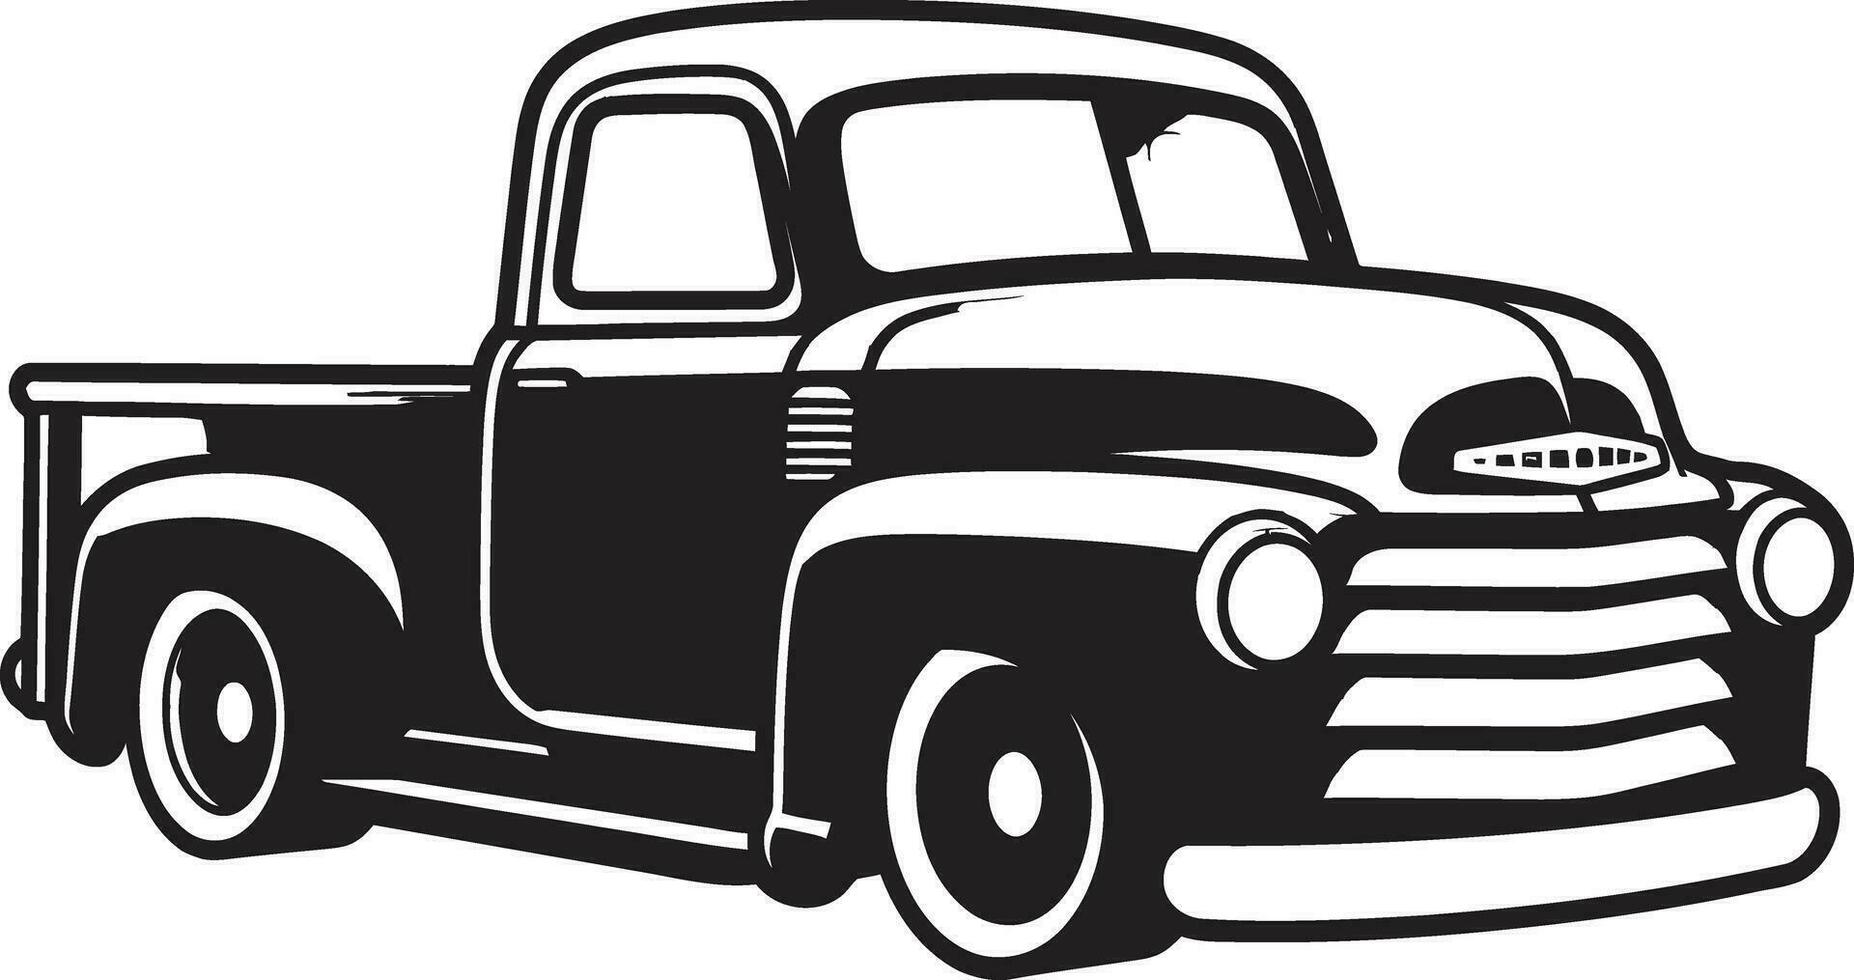 Pickup Truck Vector Graphic Road Trip Vibes Vintage Pickup Truck Vector Illustration Delight